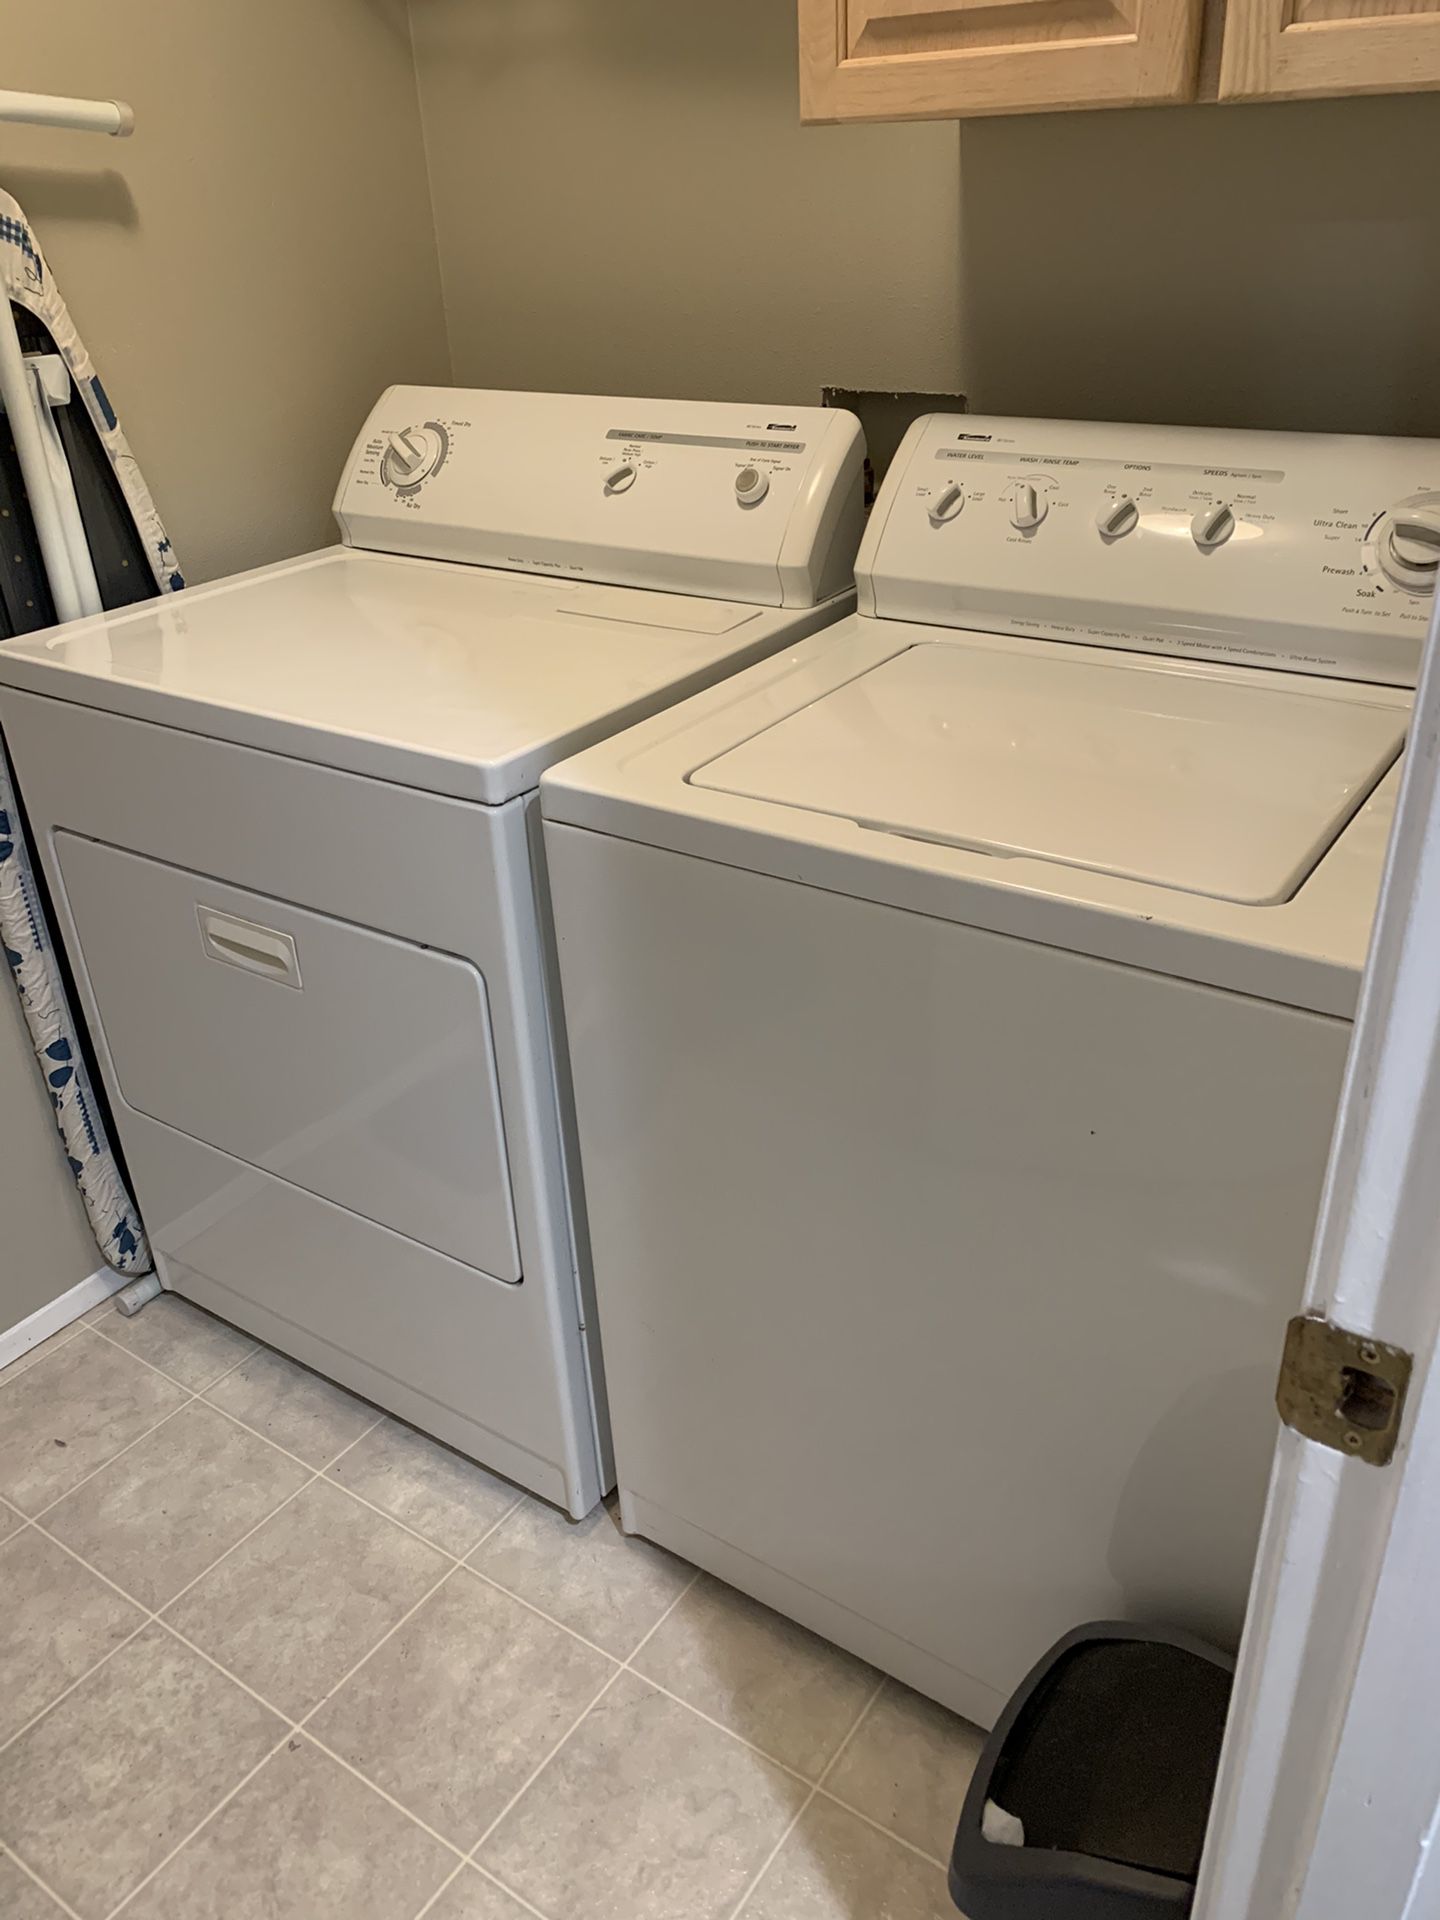 Kenmore 80 series Washing Machine and Dryer